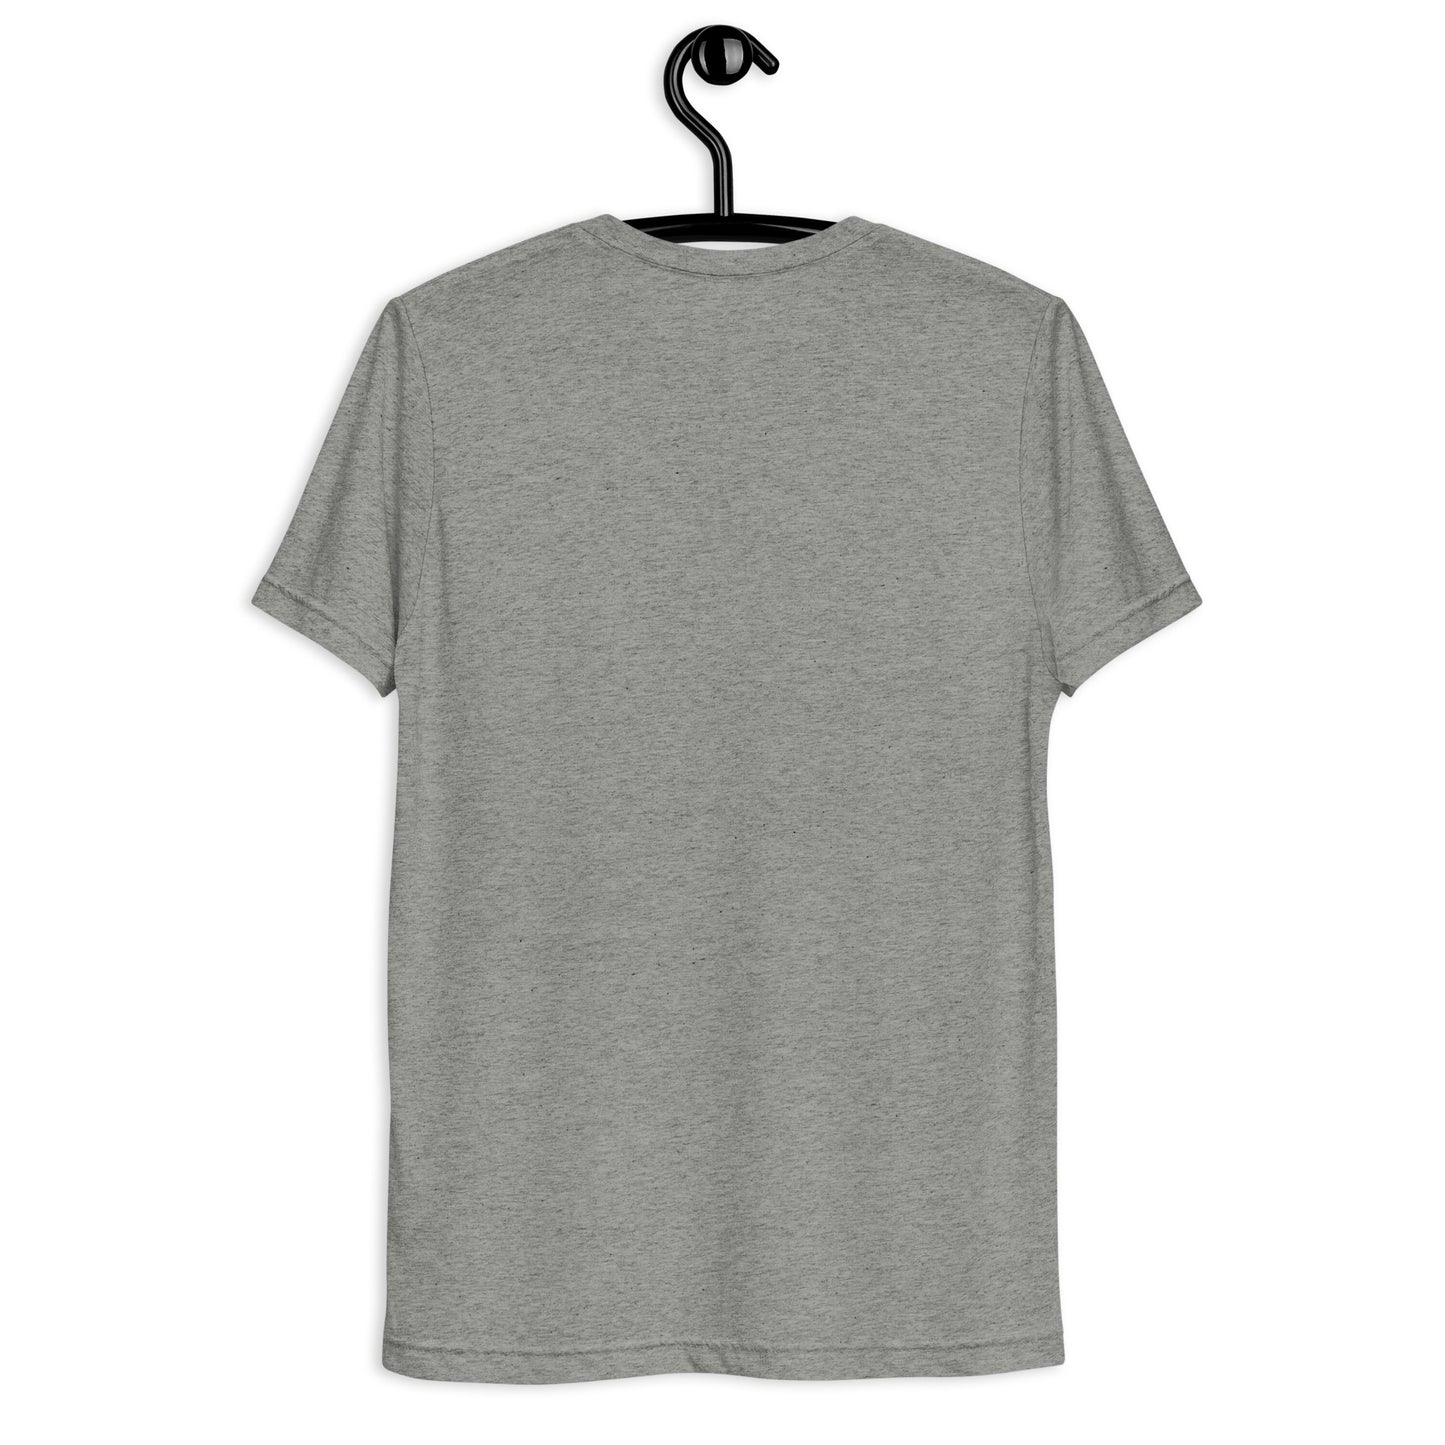 High Quality Embriodered Short sleeve t-shirt